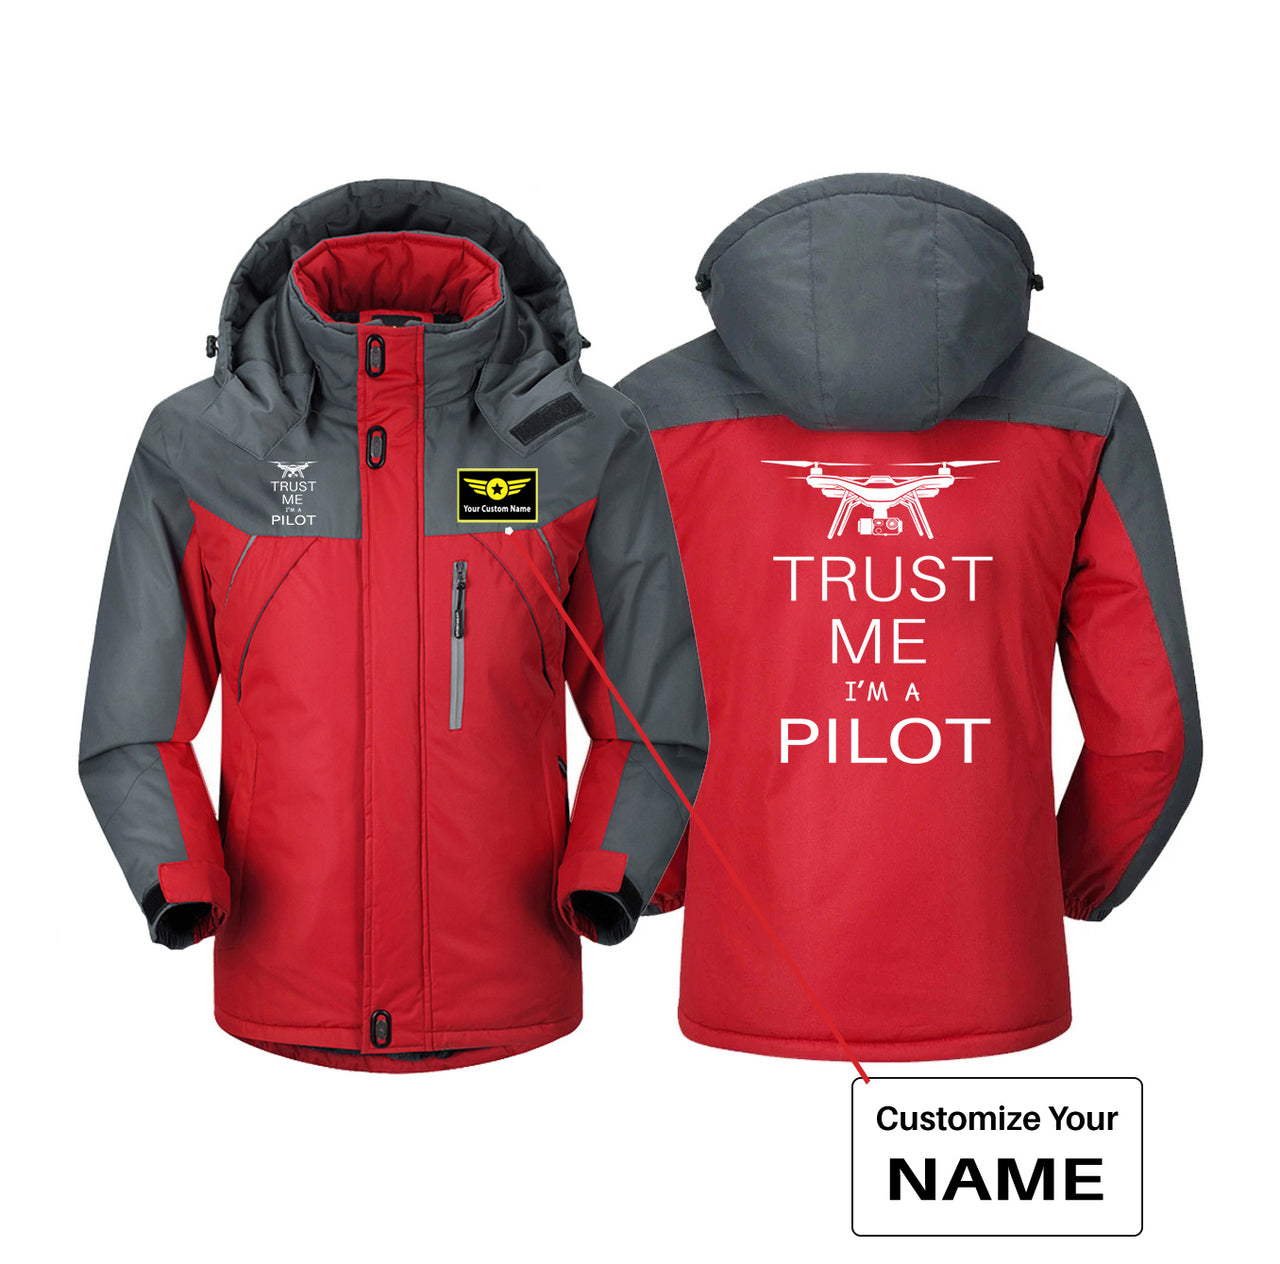 Trust Me I'm a Pilot (Drone) Designed Thick Winter Jackets